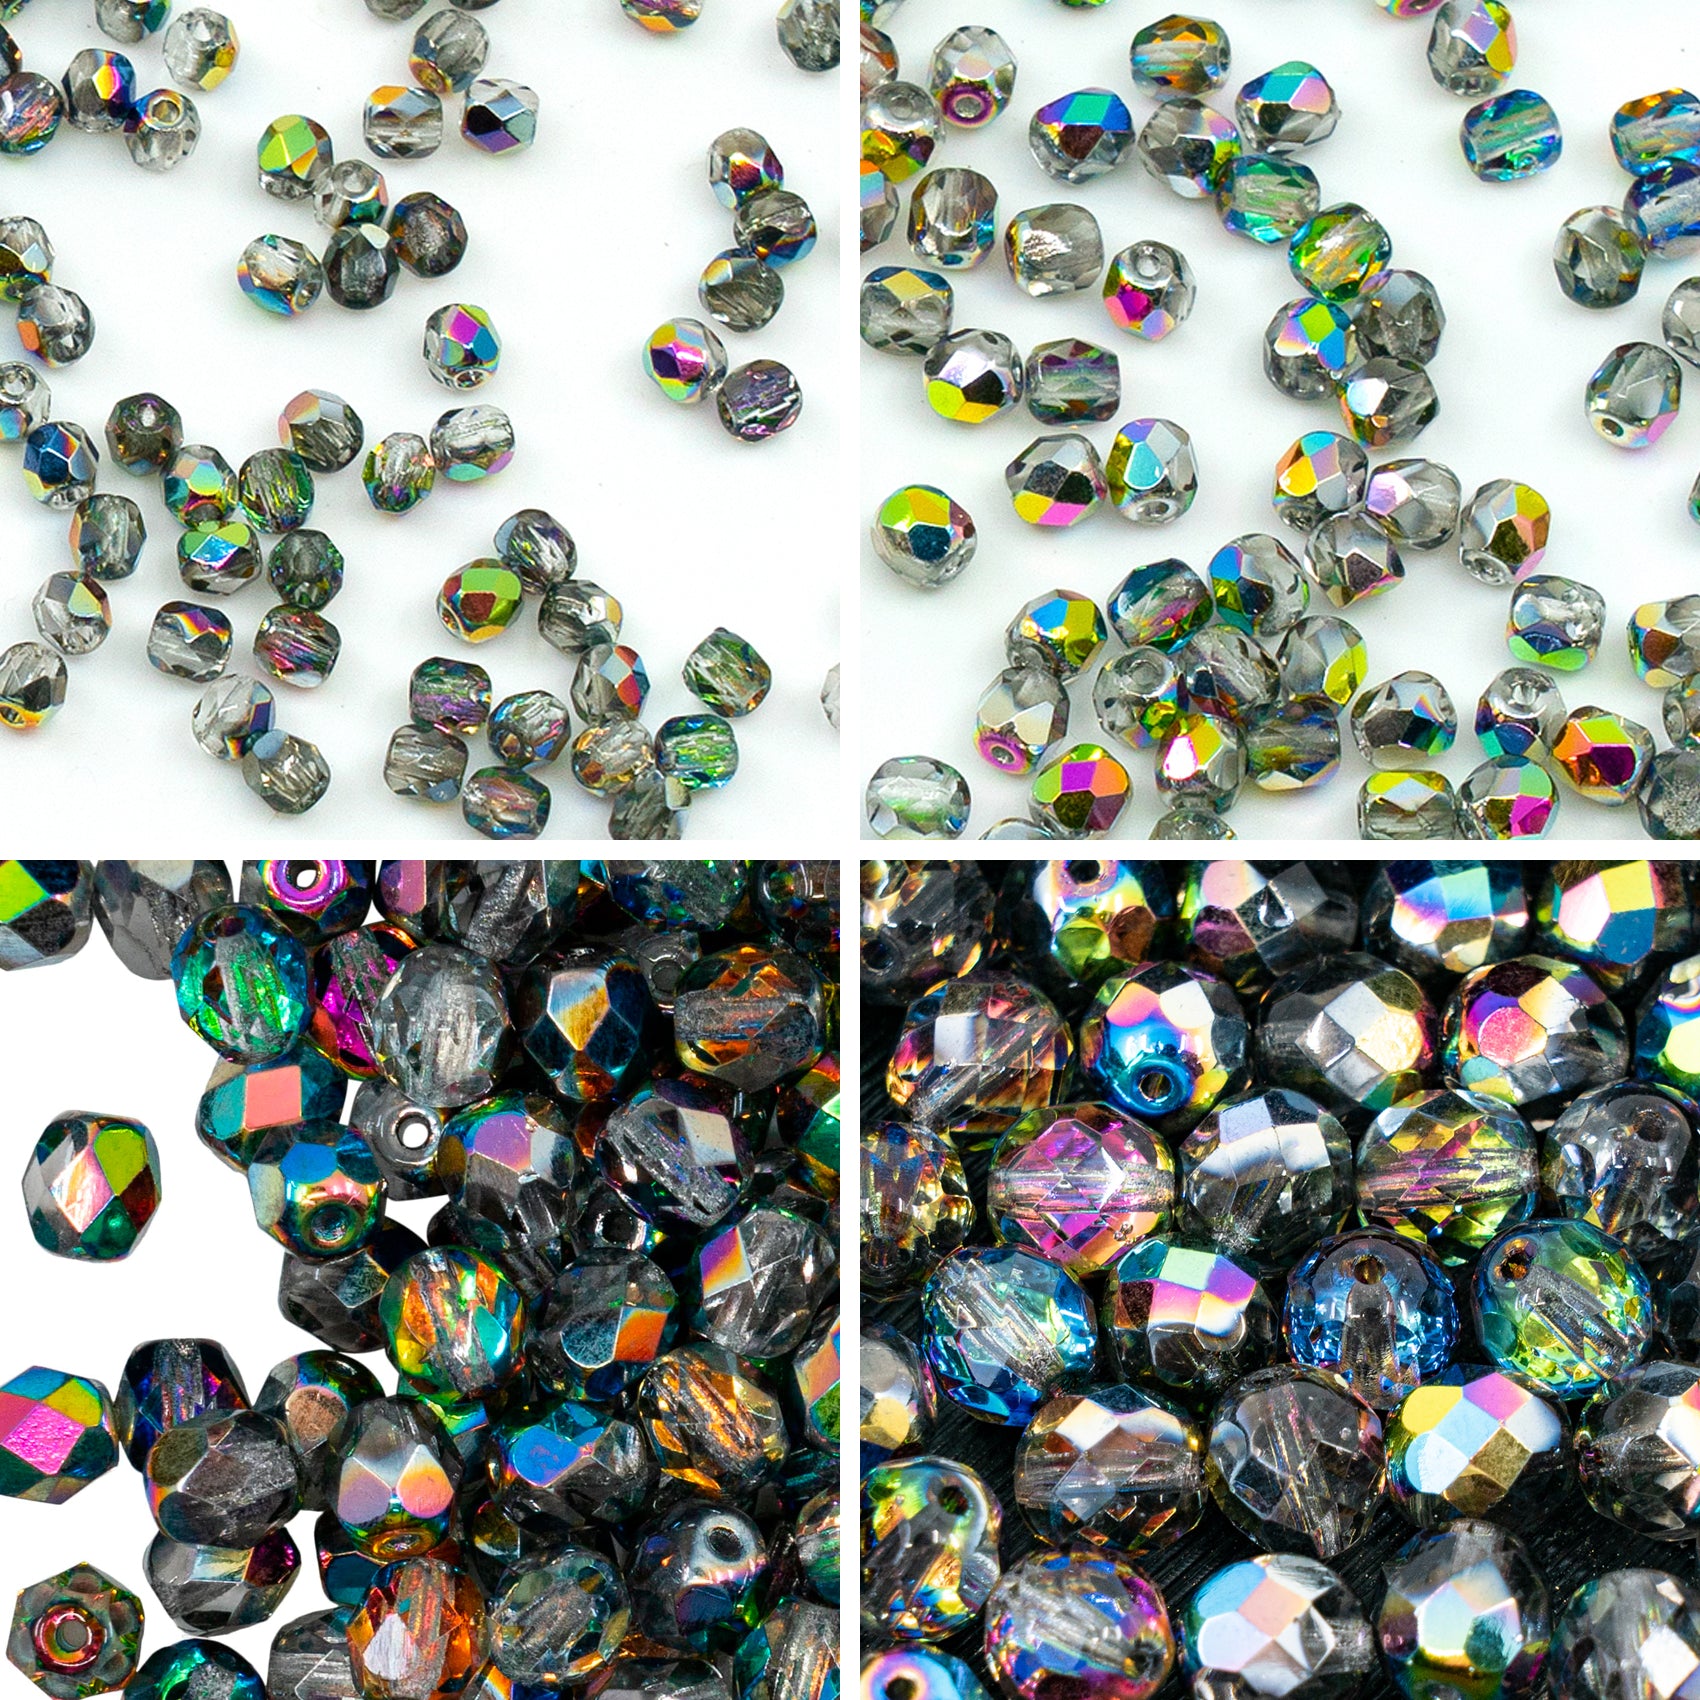 275 pcs set of Czech Faceted Glass Beads, Fire-Polished Round Crystal Vitrail - 3mm (100pcs), 4mm (100pcs), 6mm (50pcs), 8mm (25pcs) kit for jewelry making